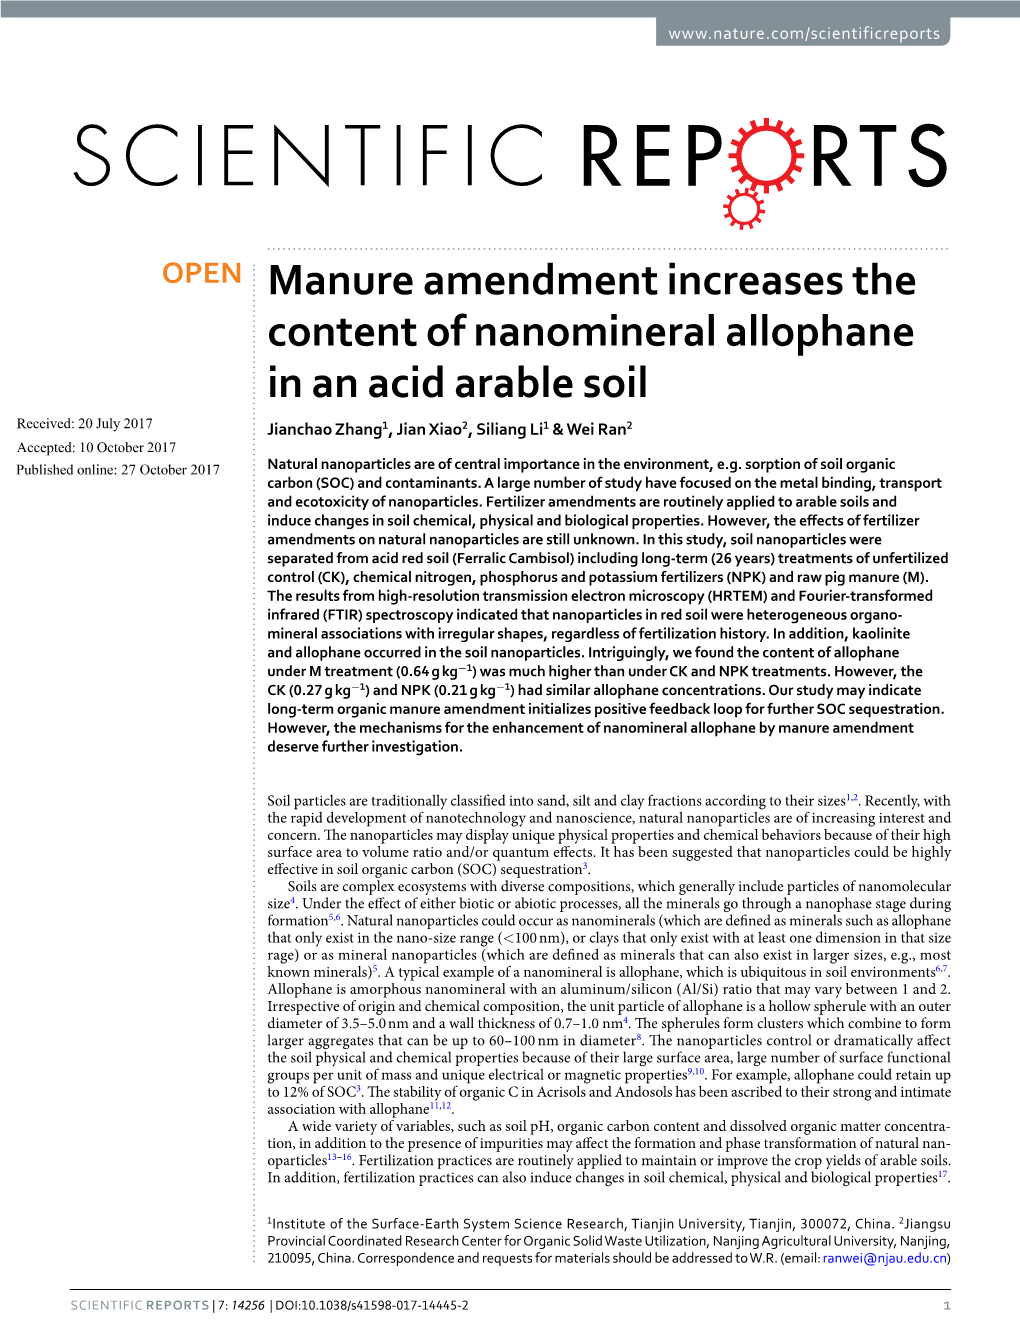 Manure Amendment Increases the Content of Nanomineral Allophane